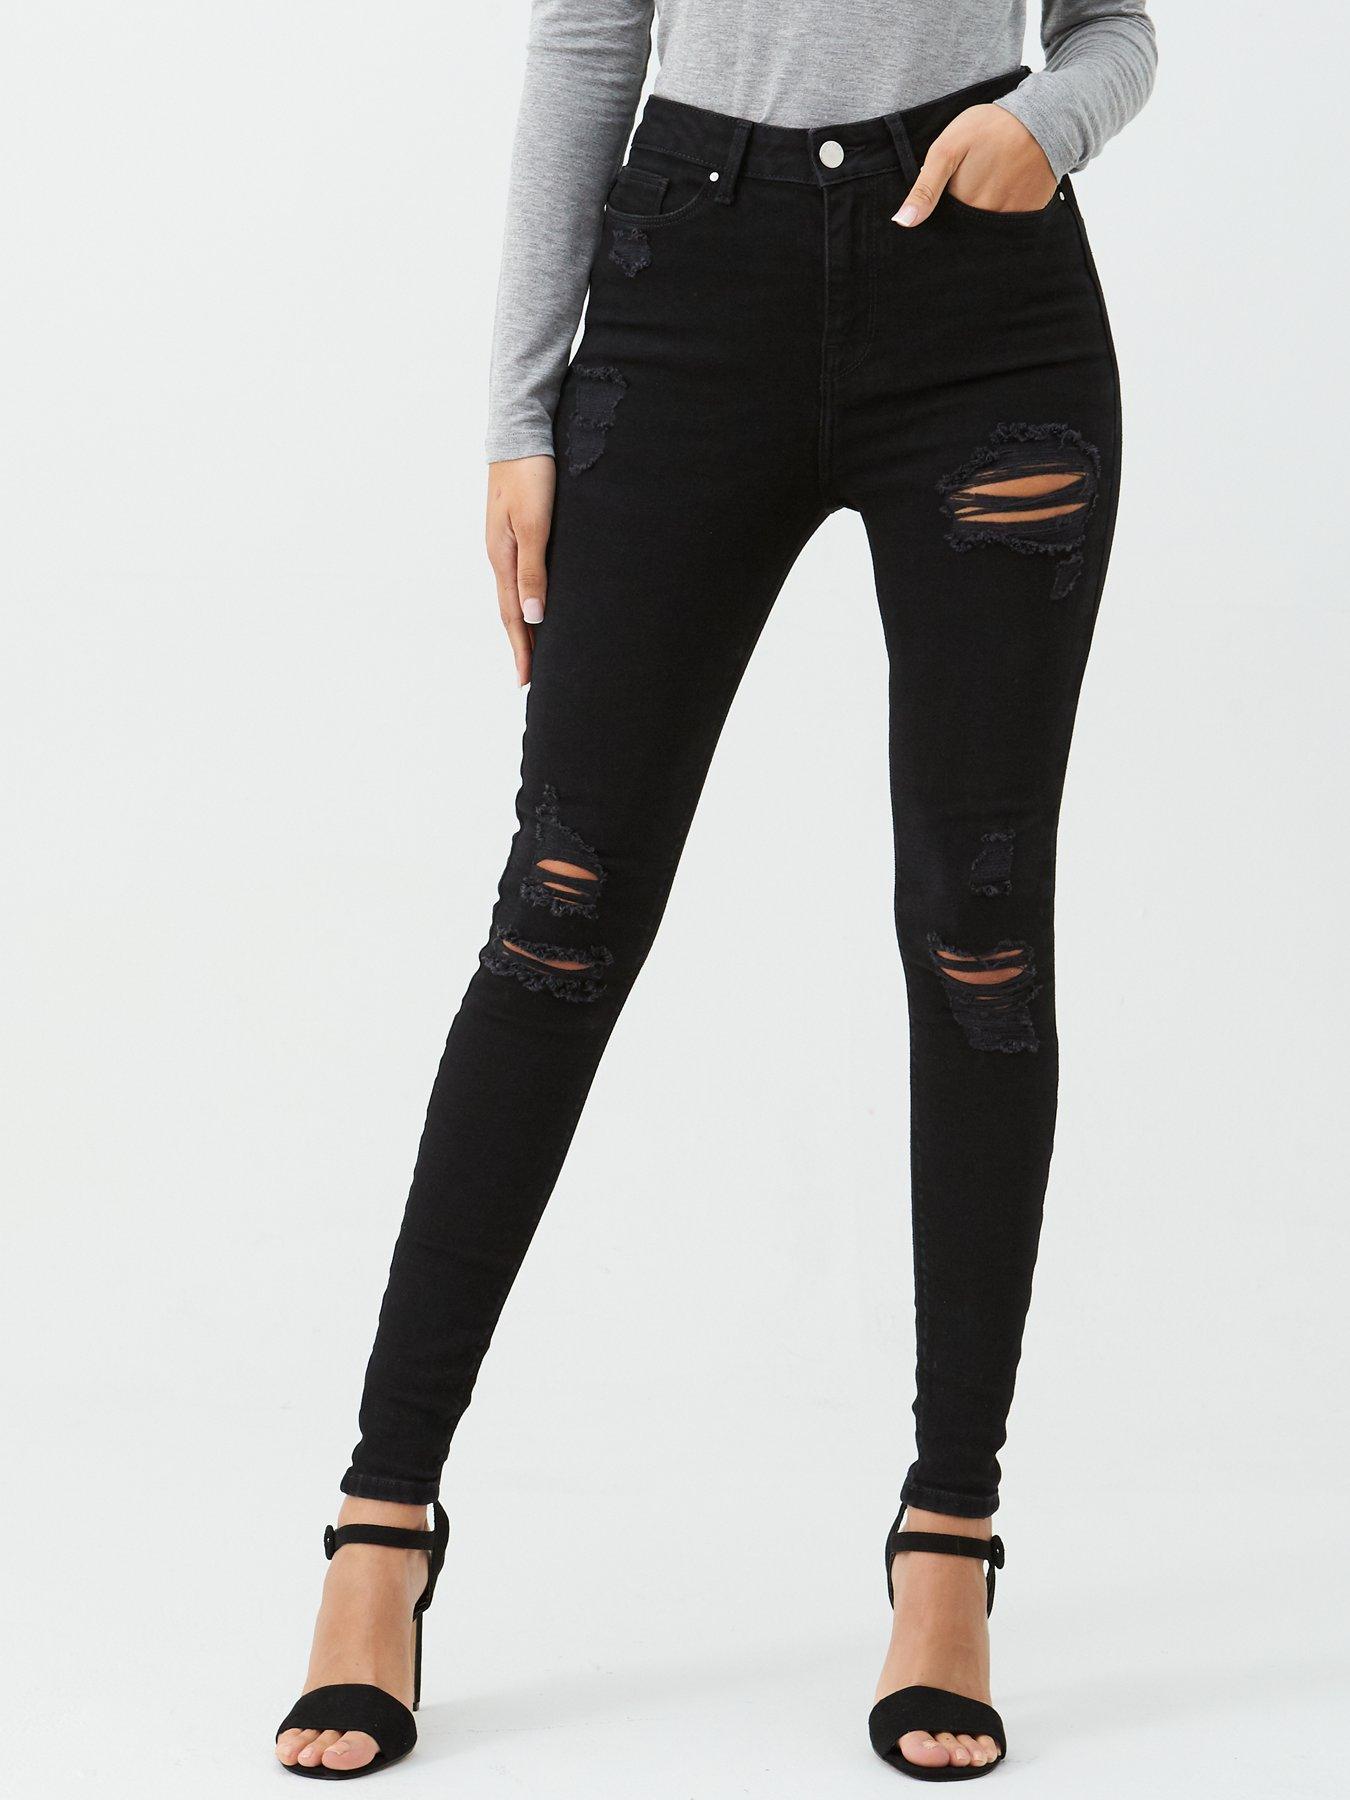 very distressed black jeans